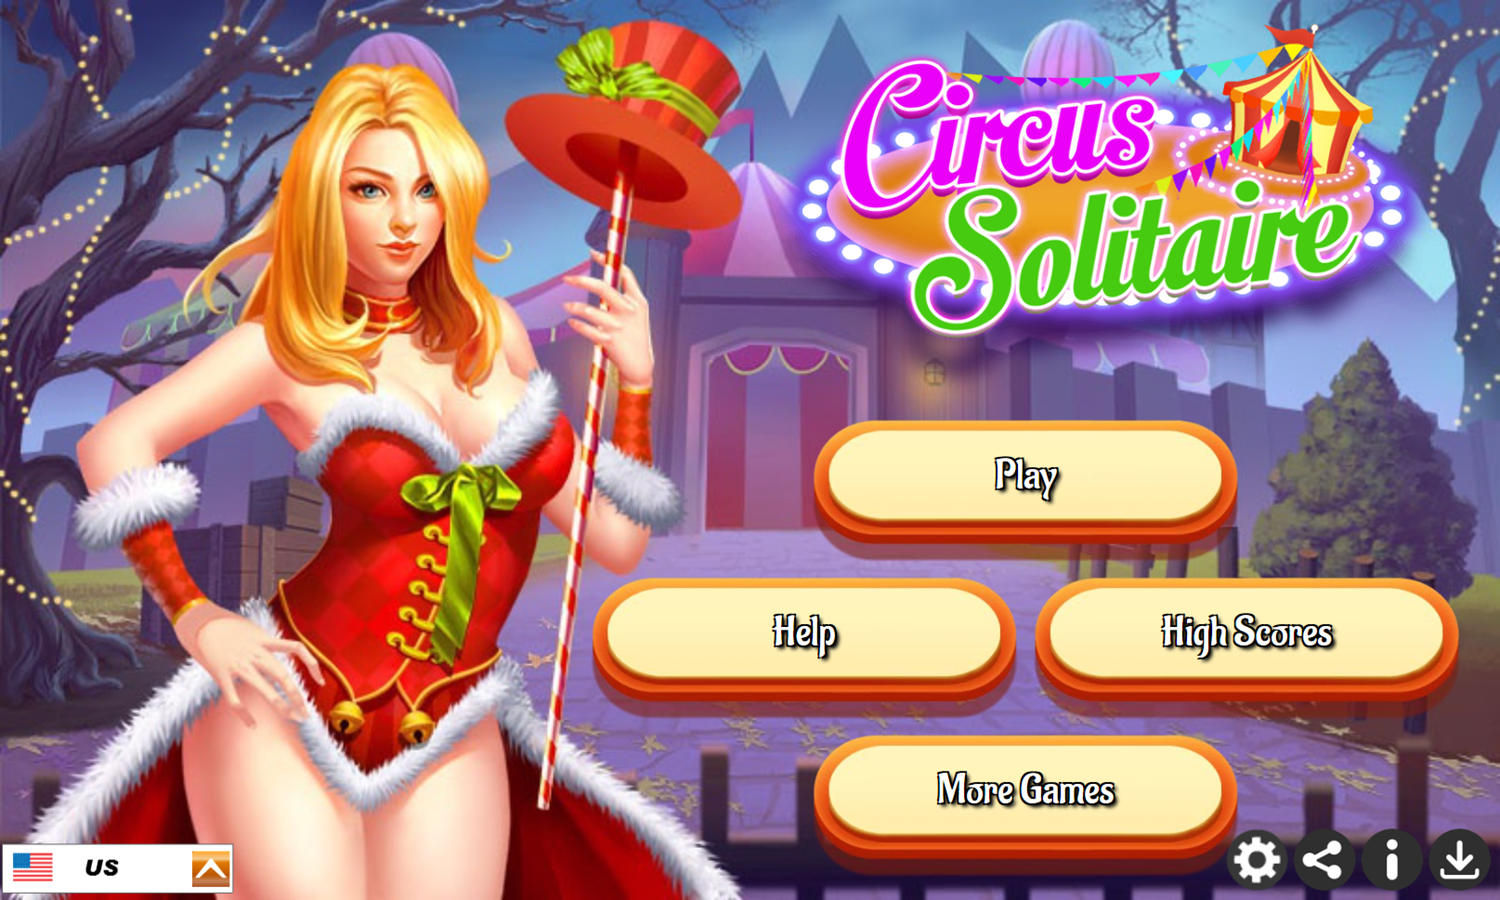 Circus Solitaire Game Welcome Screen Screenshot.